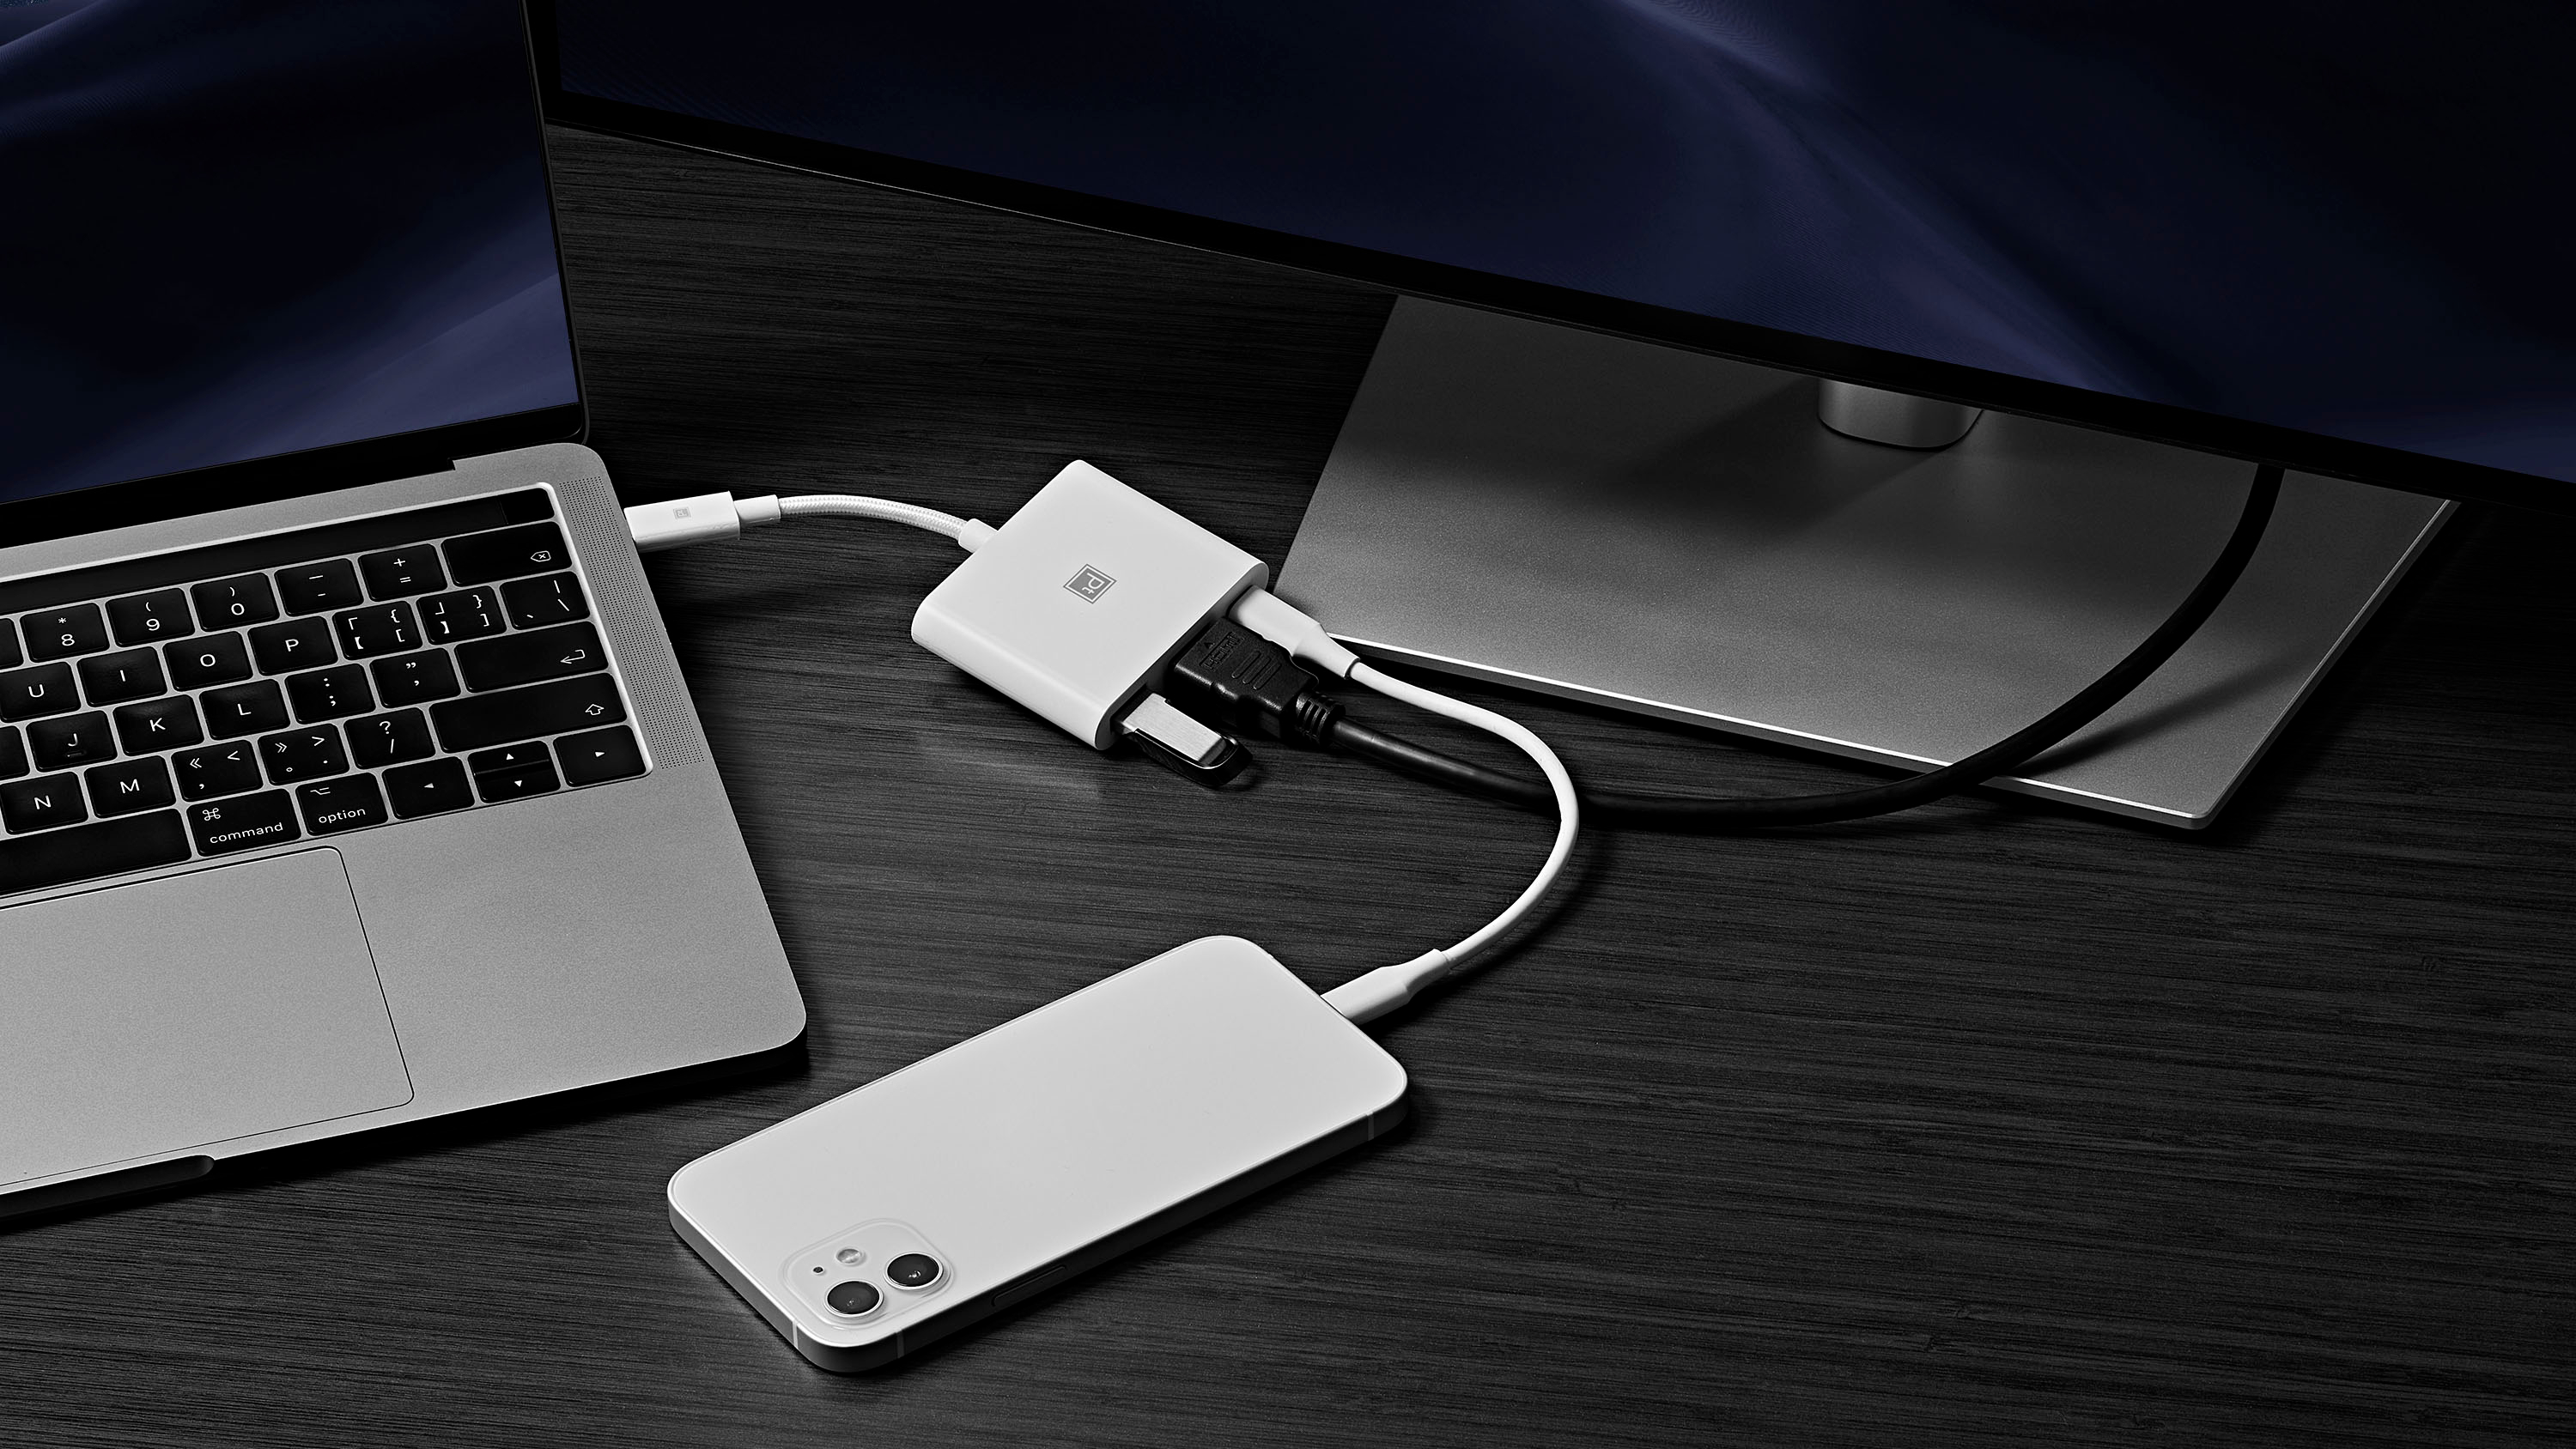  Argmao USB C Hub, 8-in-1 Dongle, USB C to USB C Data